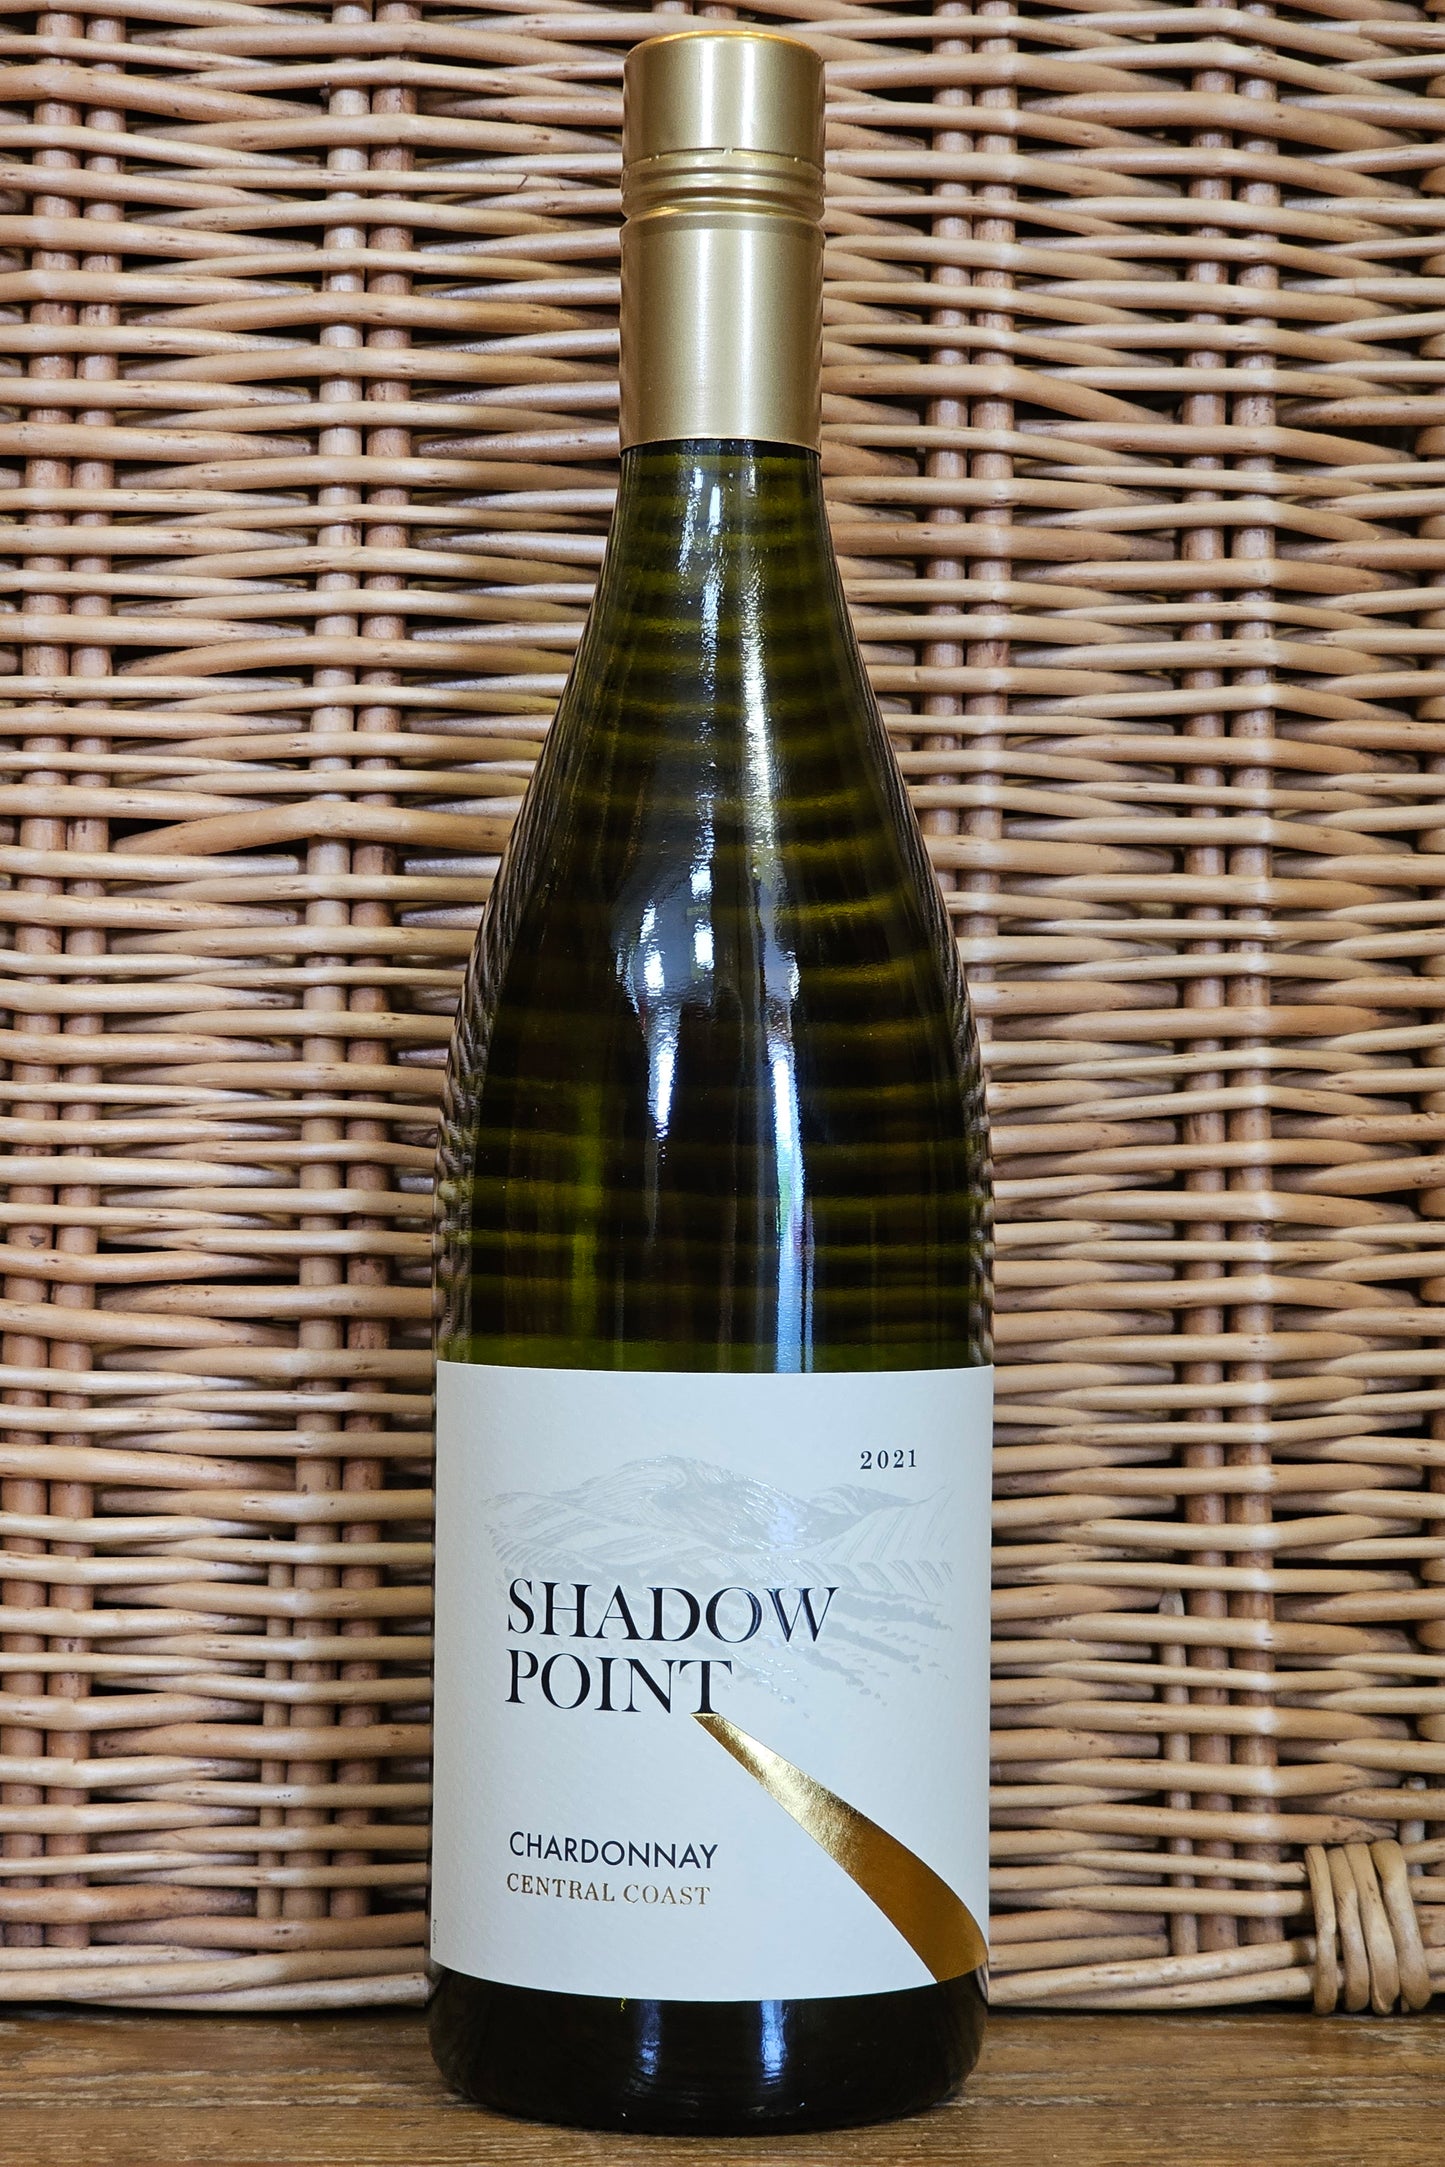 Boutinot, 'Shadow Point' Chardonnay, 2021